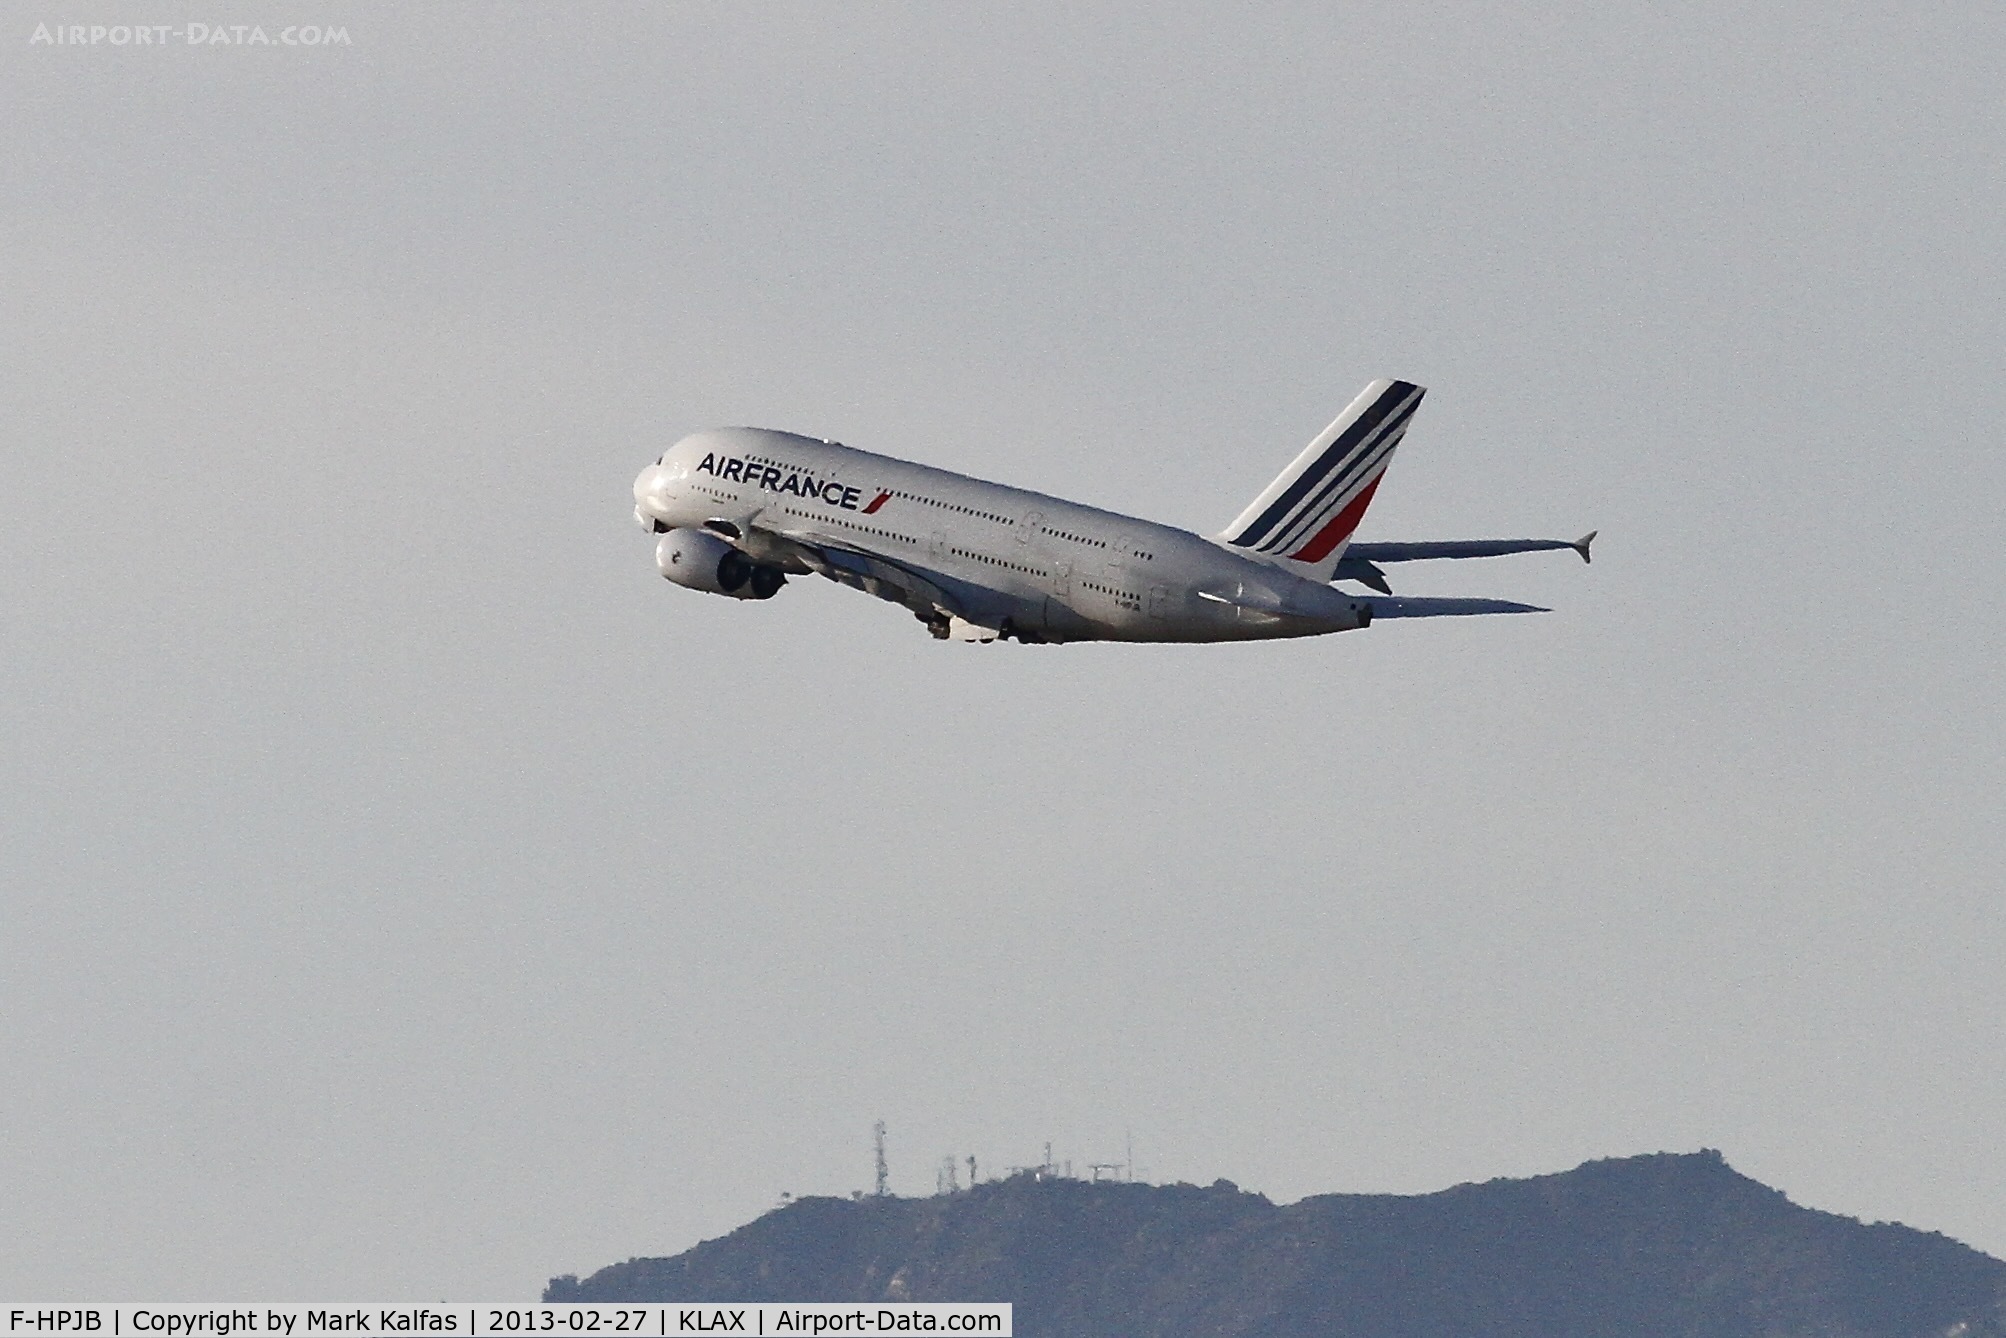 F-HPJB, 2009 Airbus A380-861 C/N 040, Air France B773 ZK-OKM, departing LAX